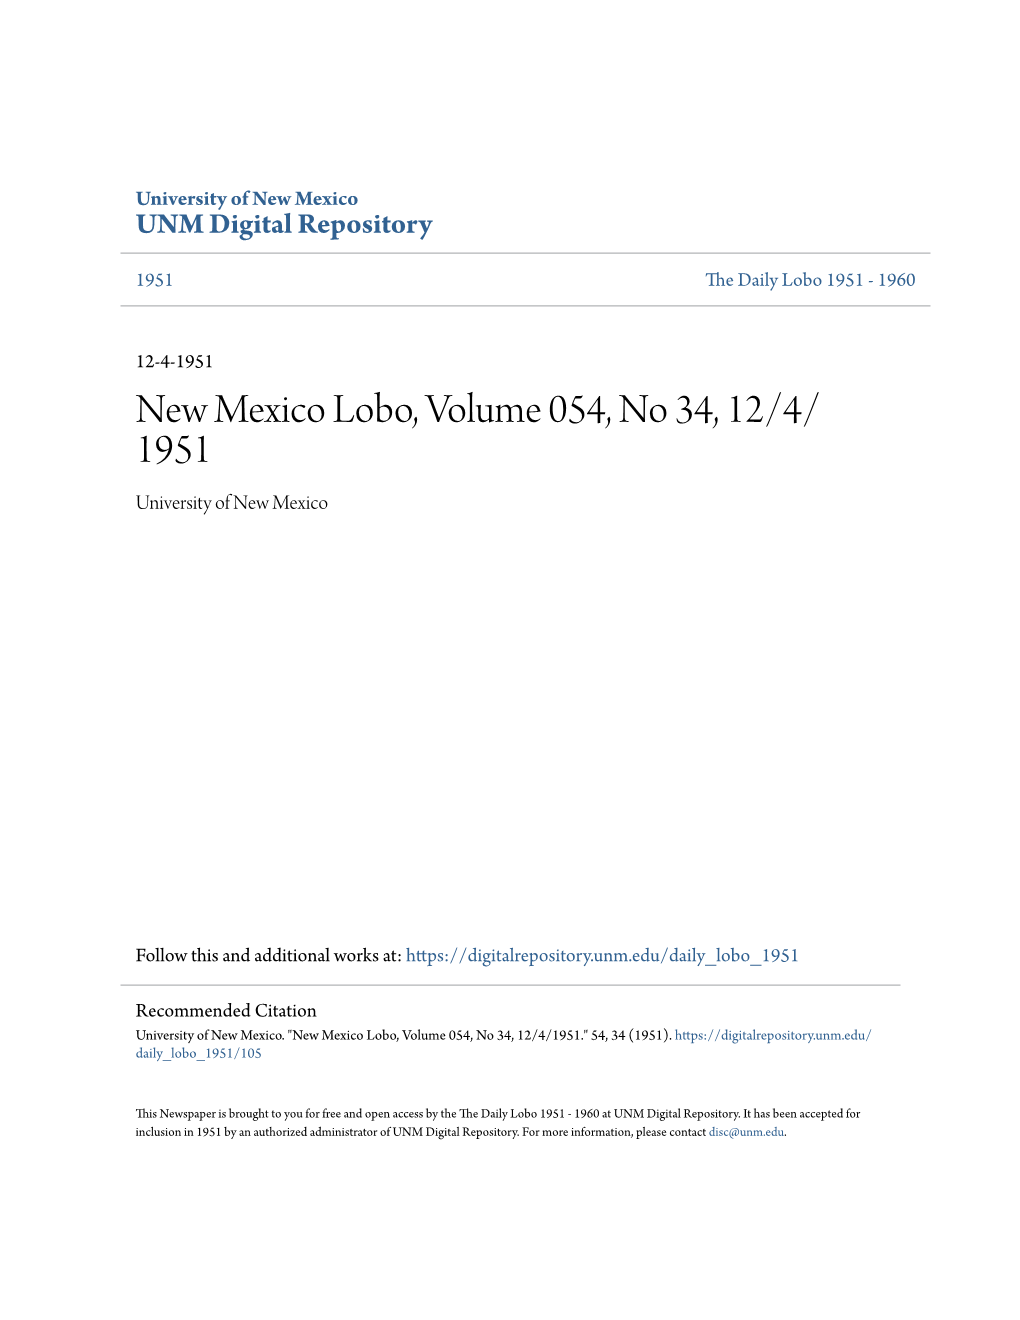 New Mexico Lobo, Volume 054, No 34, 12/4/1951." 54, 34 (1951)